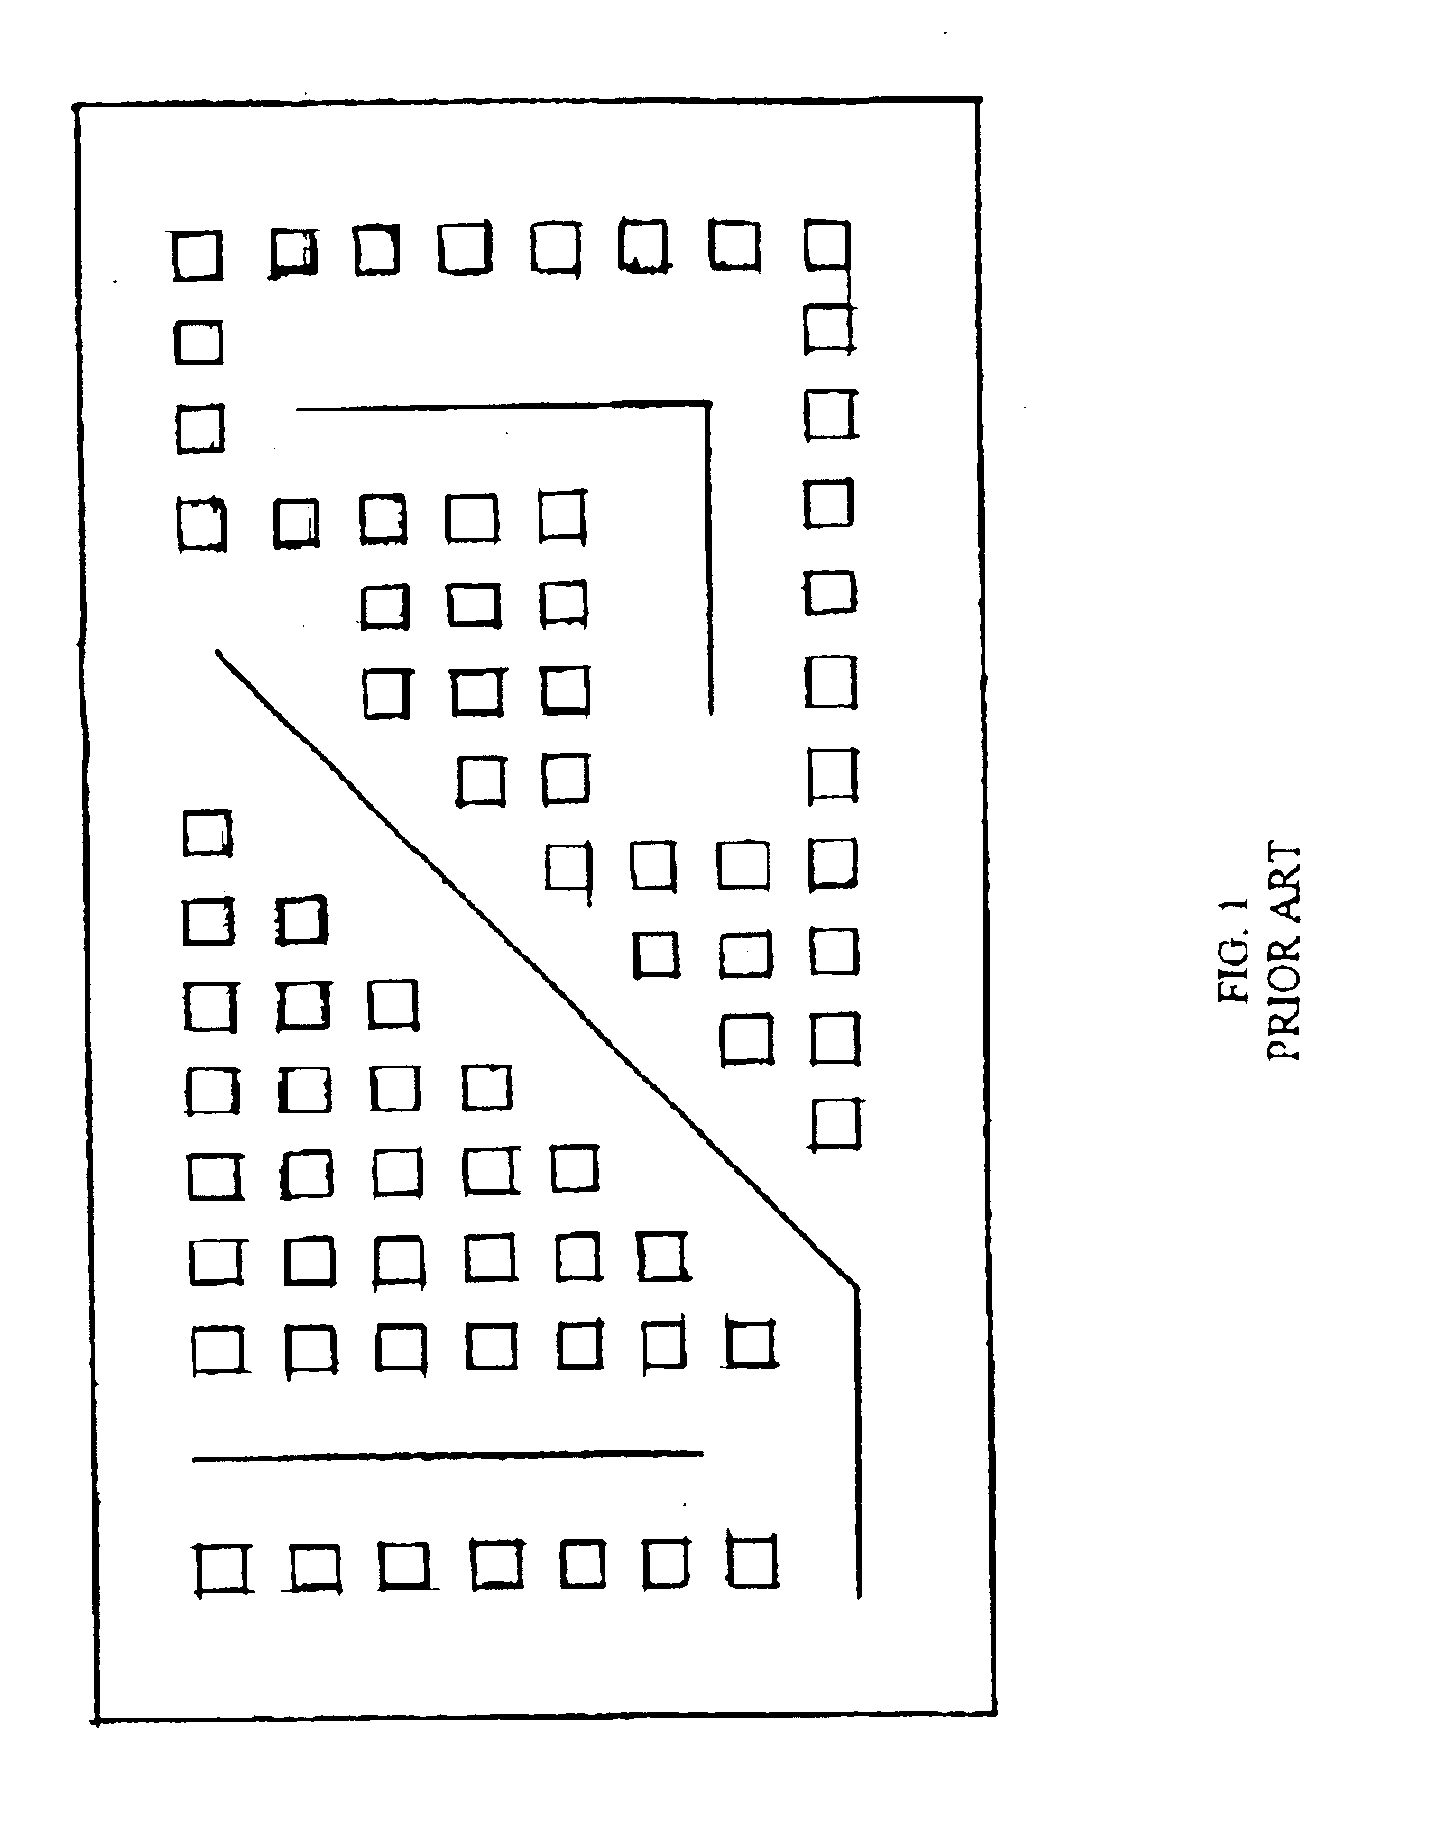 Simplified tiling pattern method